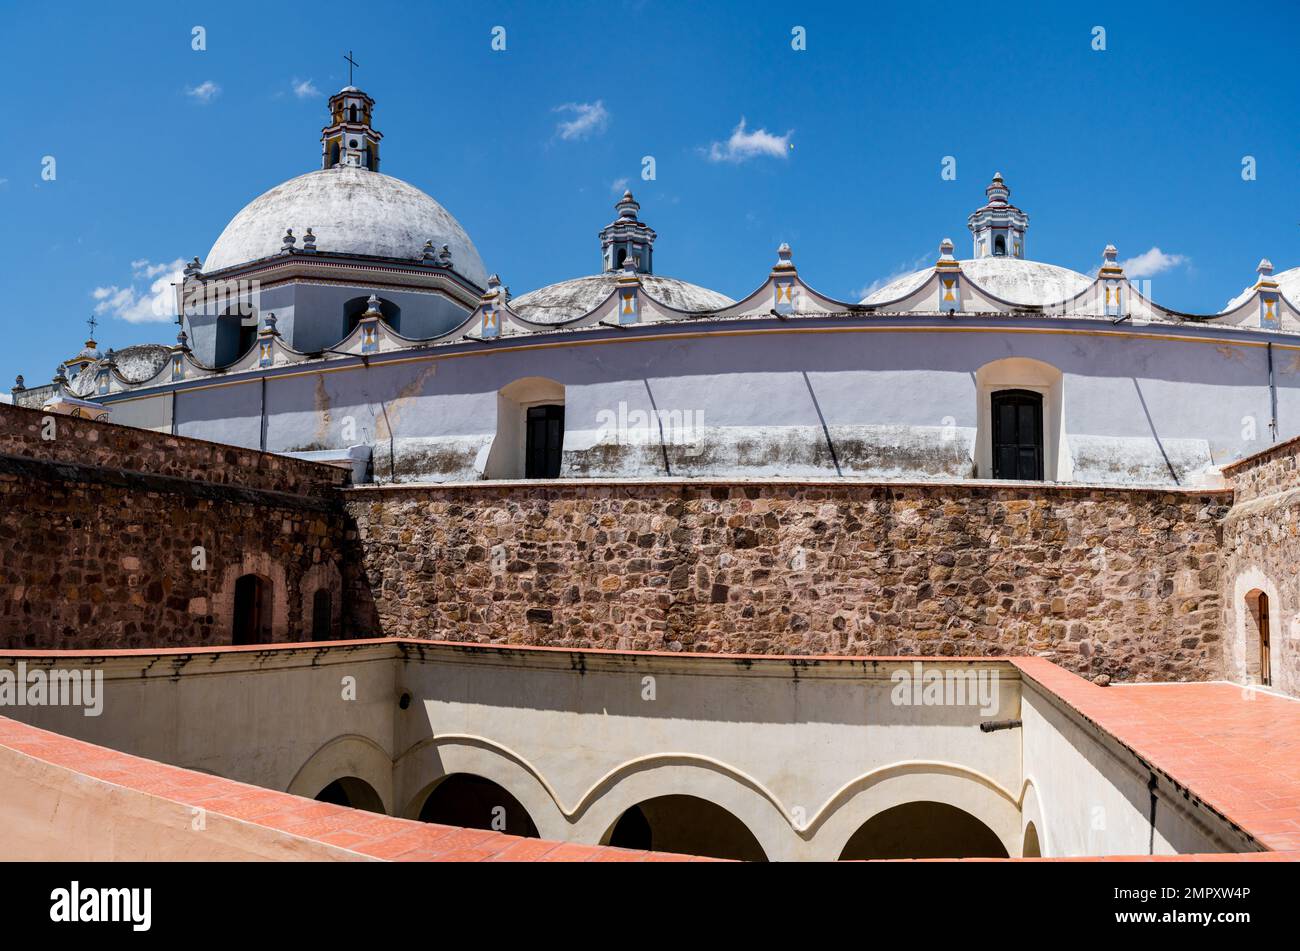 Domes of the Church of Santo Domingo de Guzman in Ocotlan de Morelos, Oaxaca, Mexico.  The monastery is in front. Stock Photo